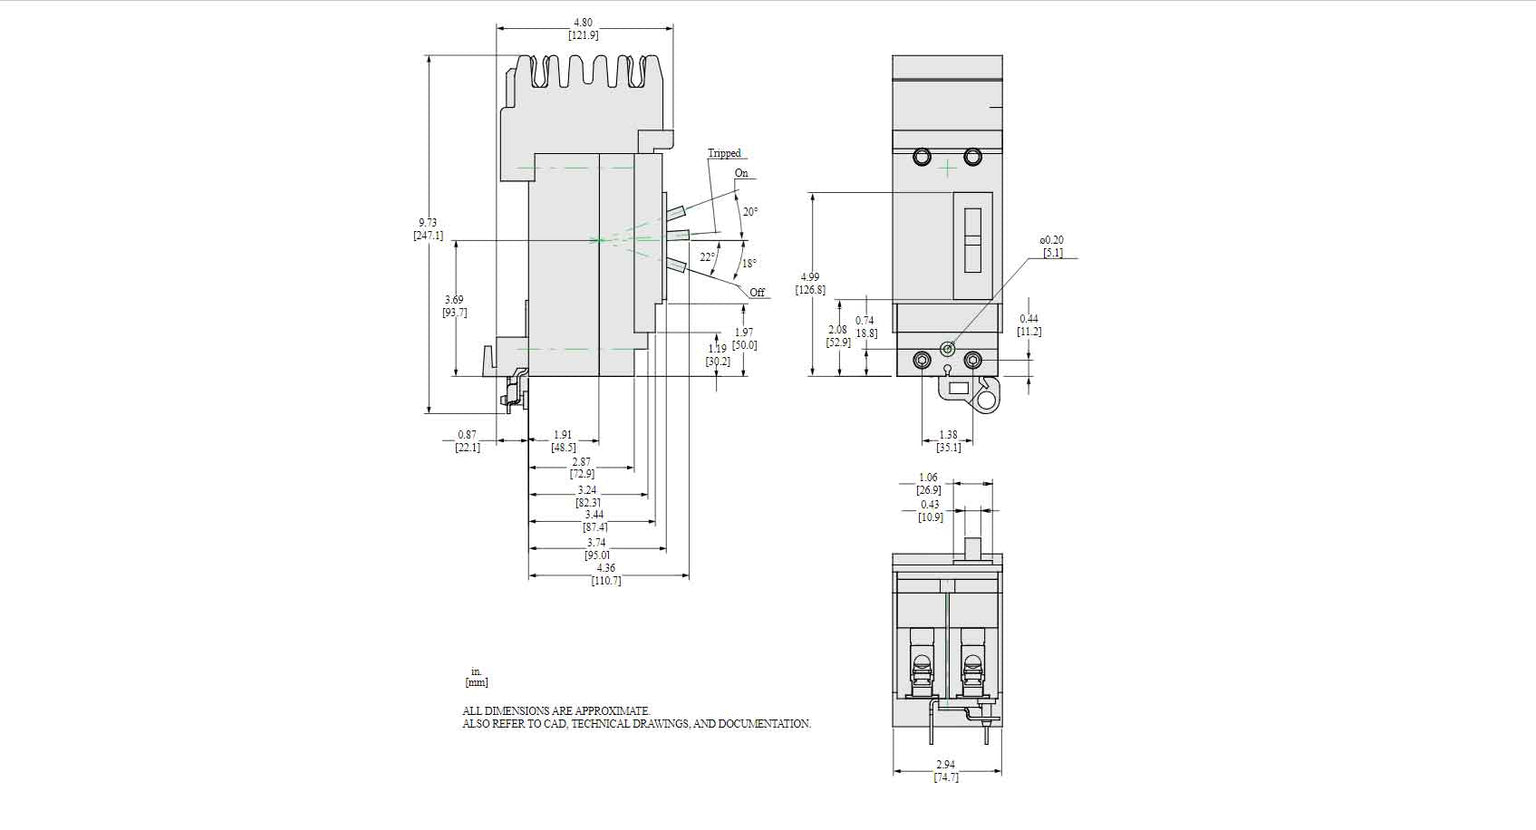 HDA260802 - Square D - Molded Case Circuit Breakers